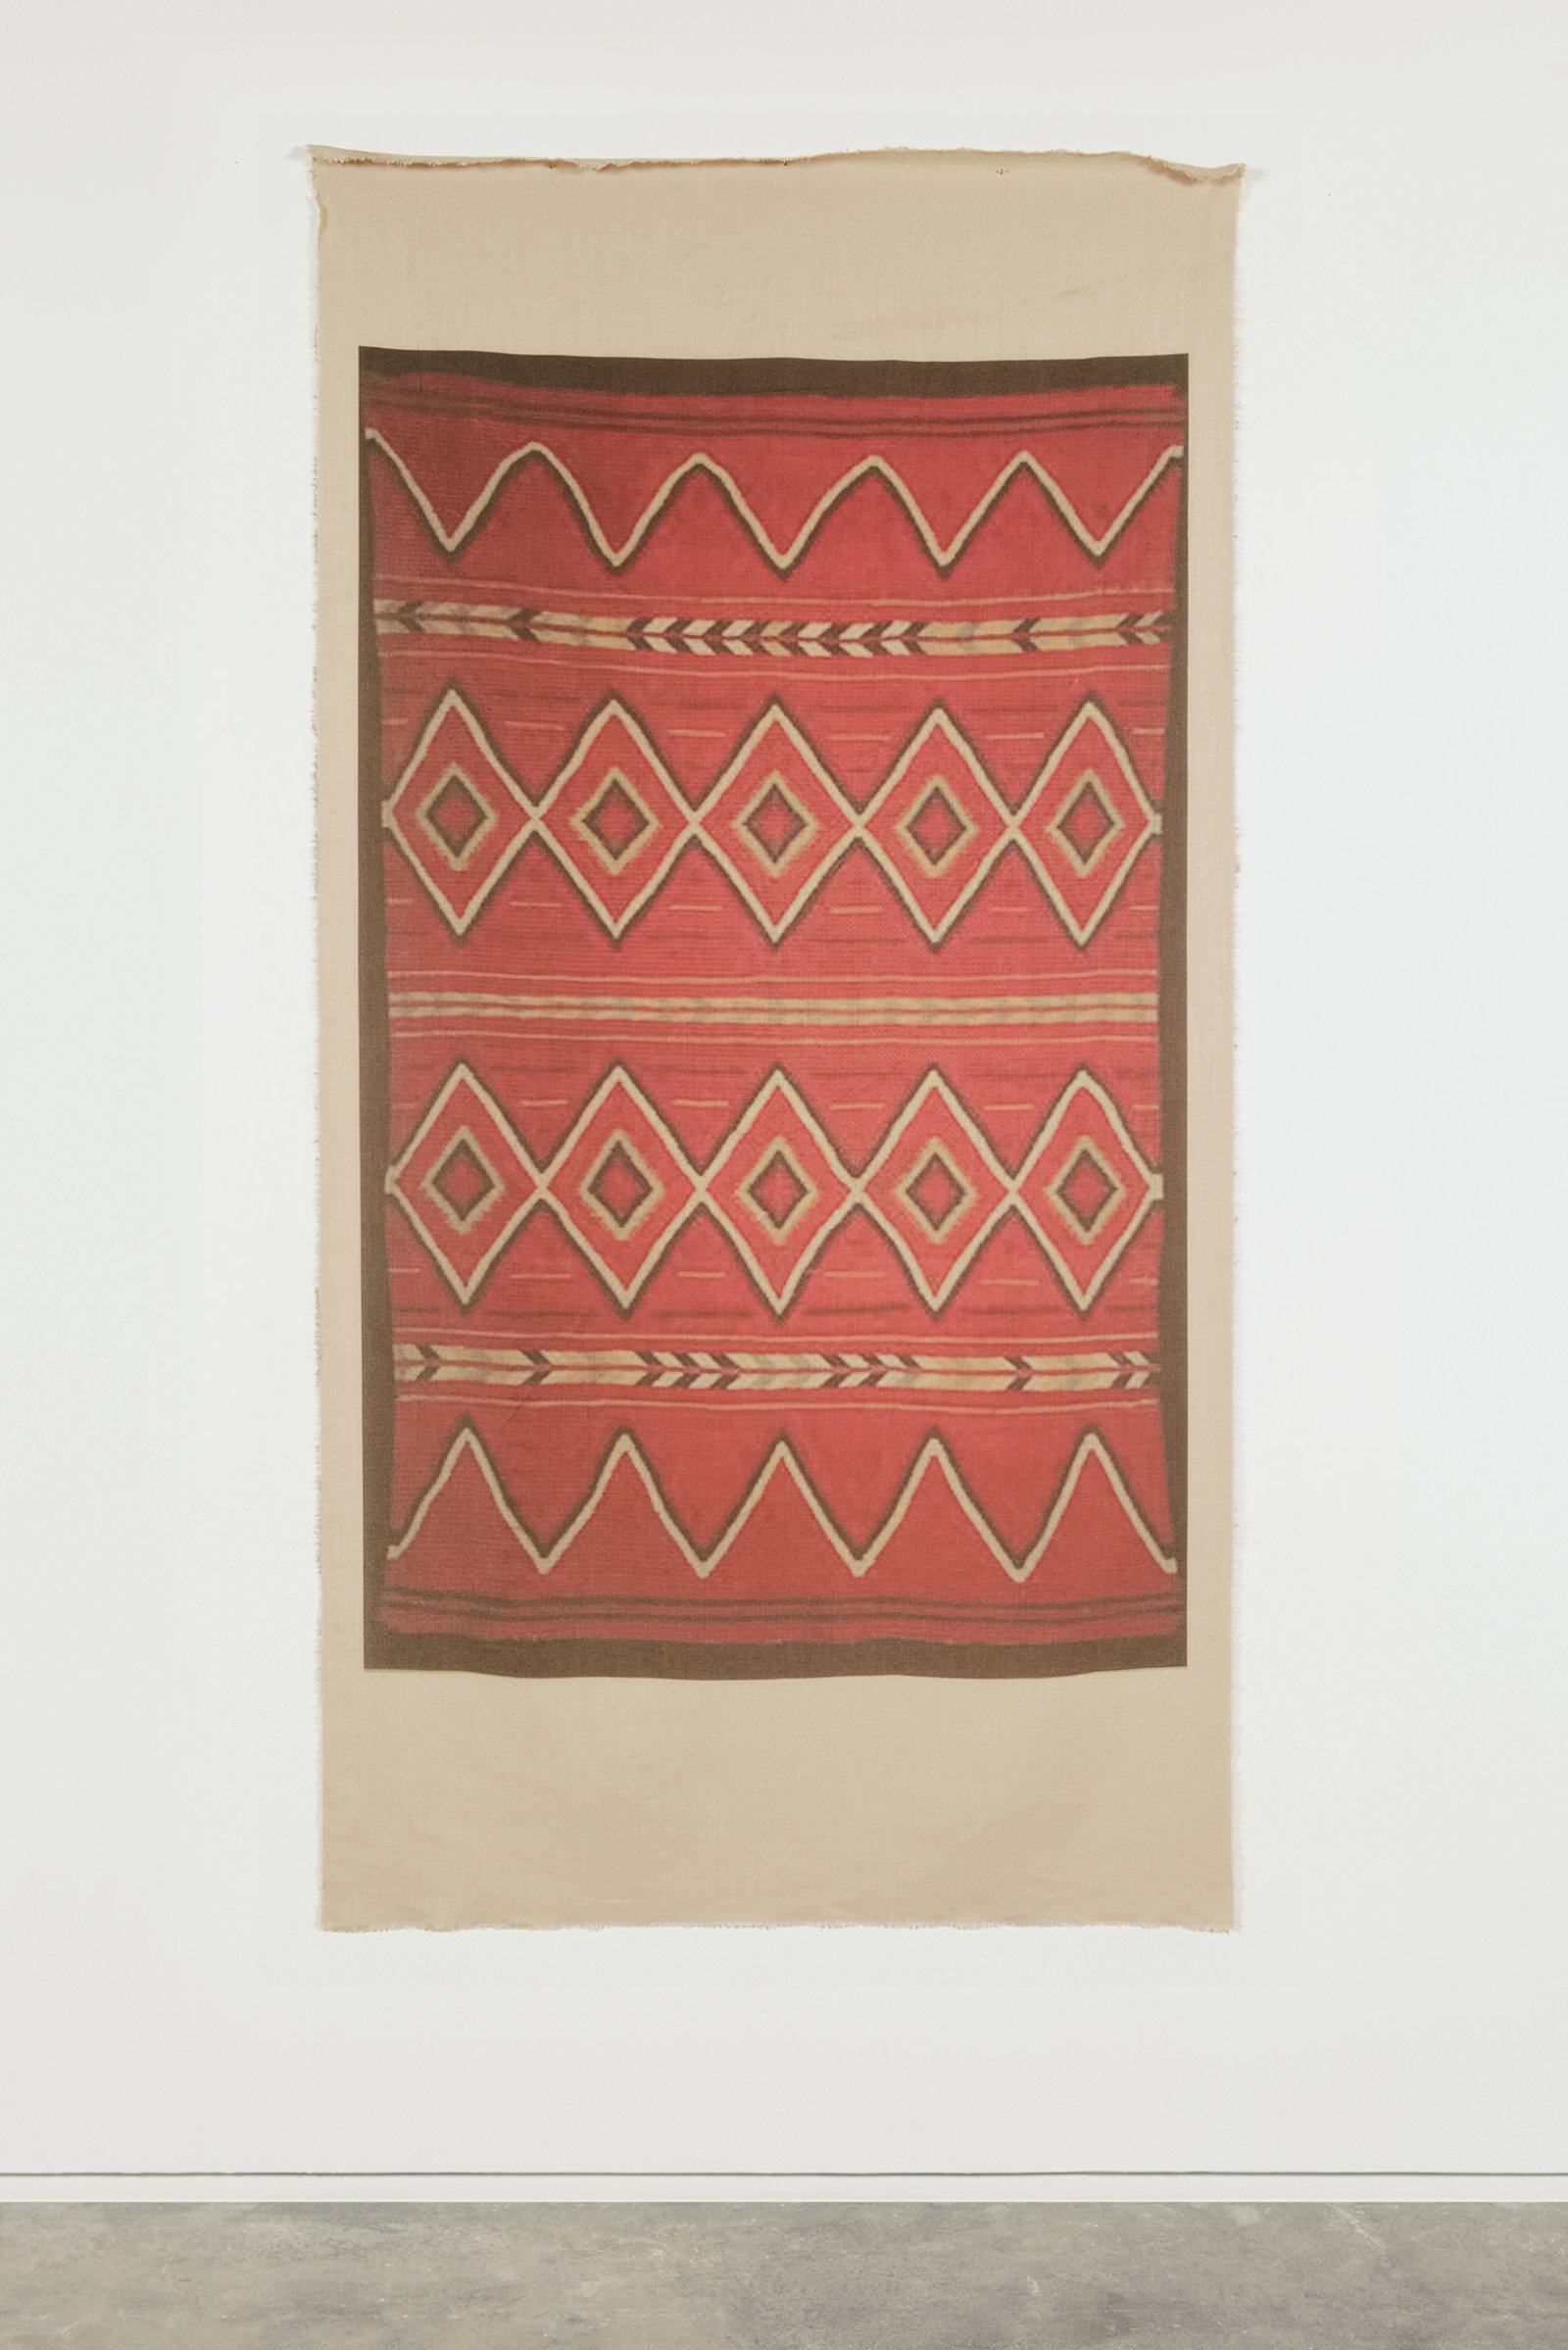 Duane Linklater, UMFA1978.169, 2015, inkjet print on linen, nails, from Navajo Serape, Utah Museum of Fine Arts Collection, 85 x 44 in. (216 x 112 cm)